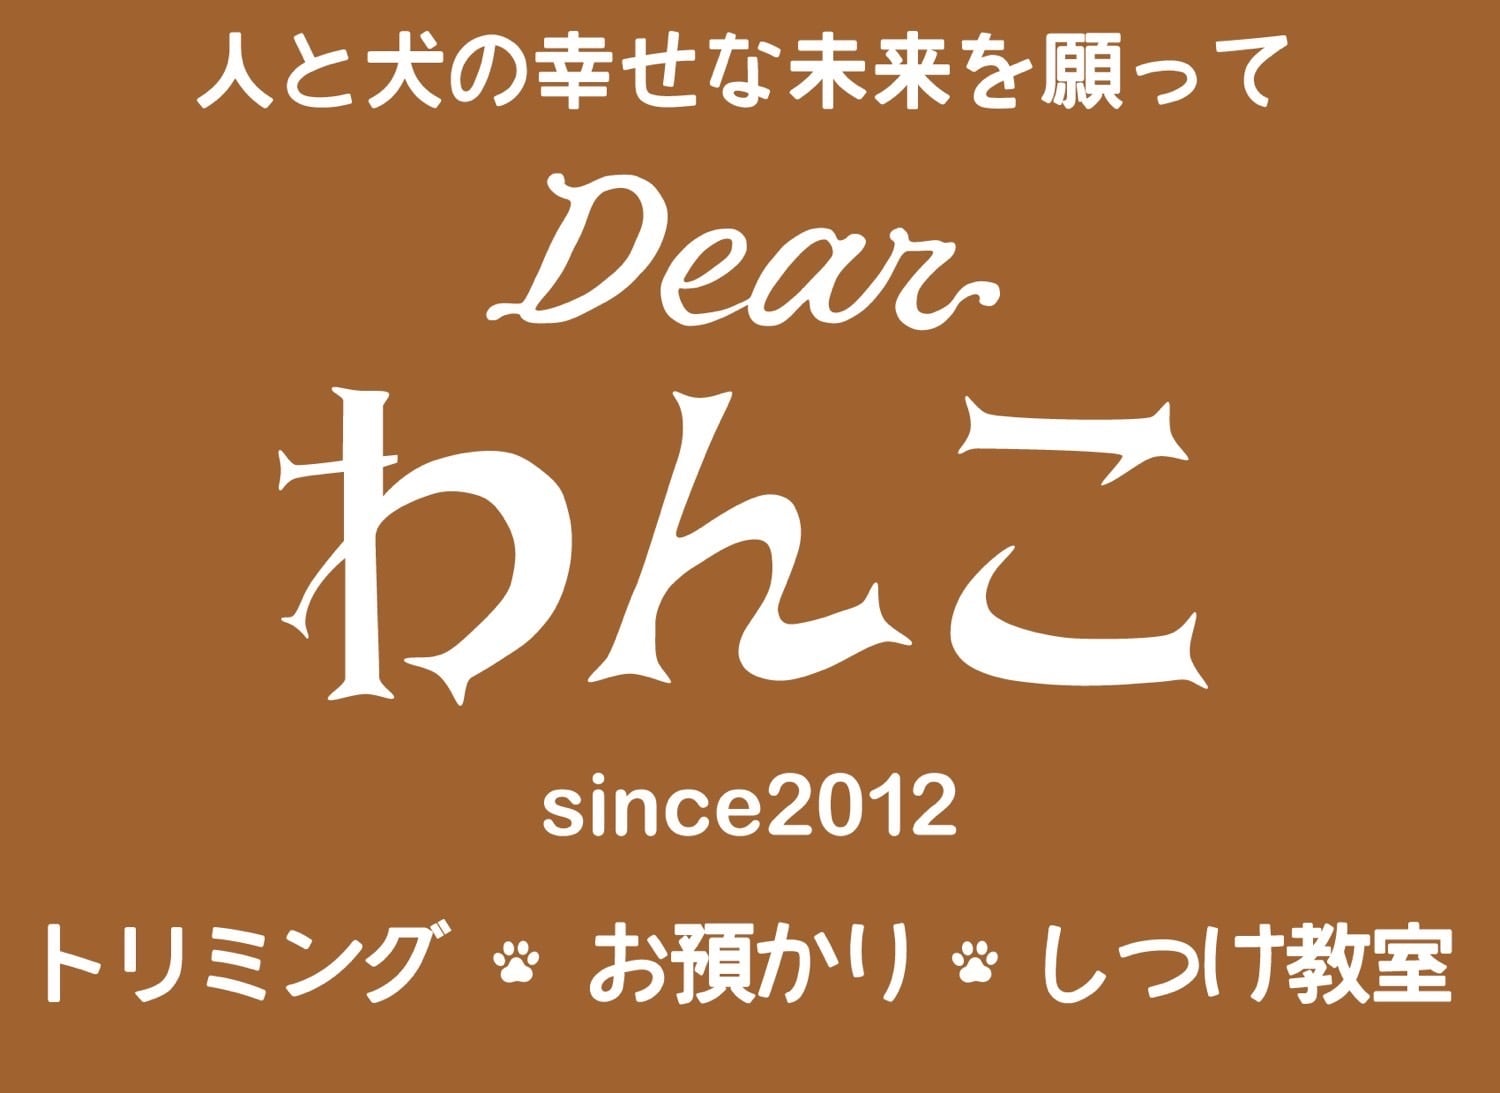 Dearわんこ